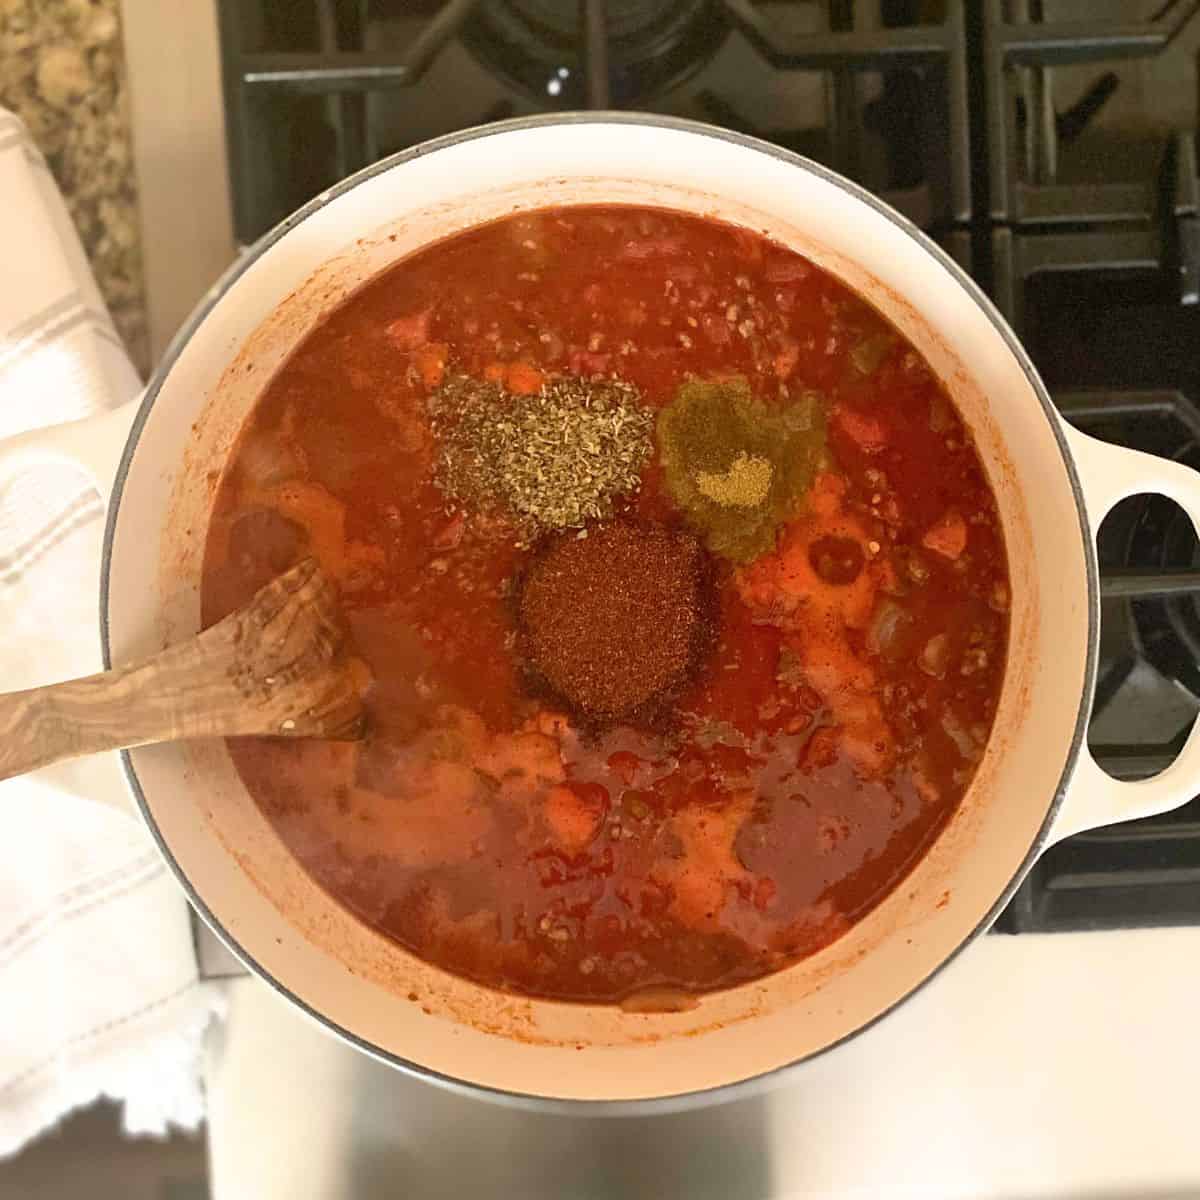 Added seasonings to chili on stove